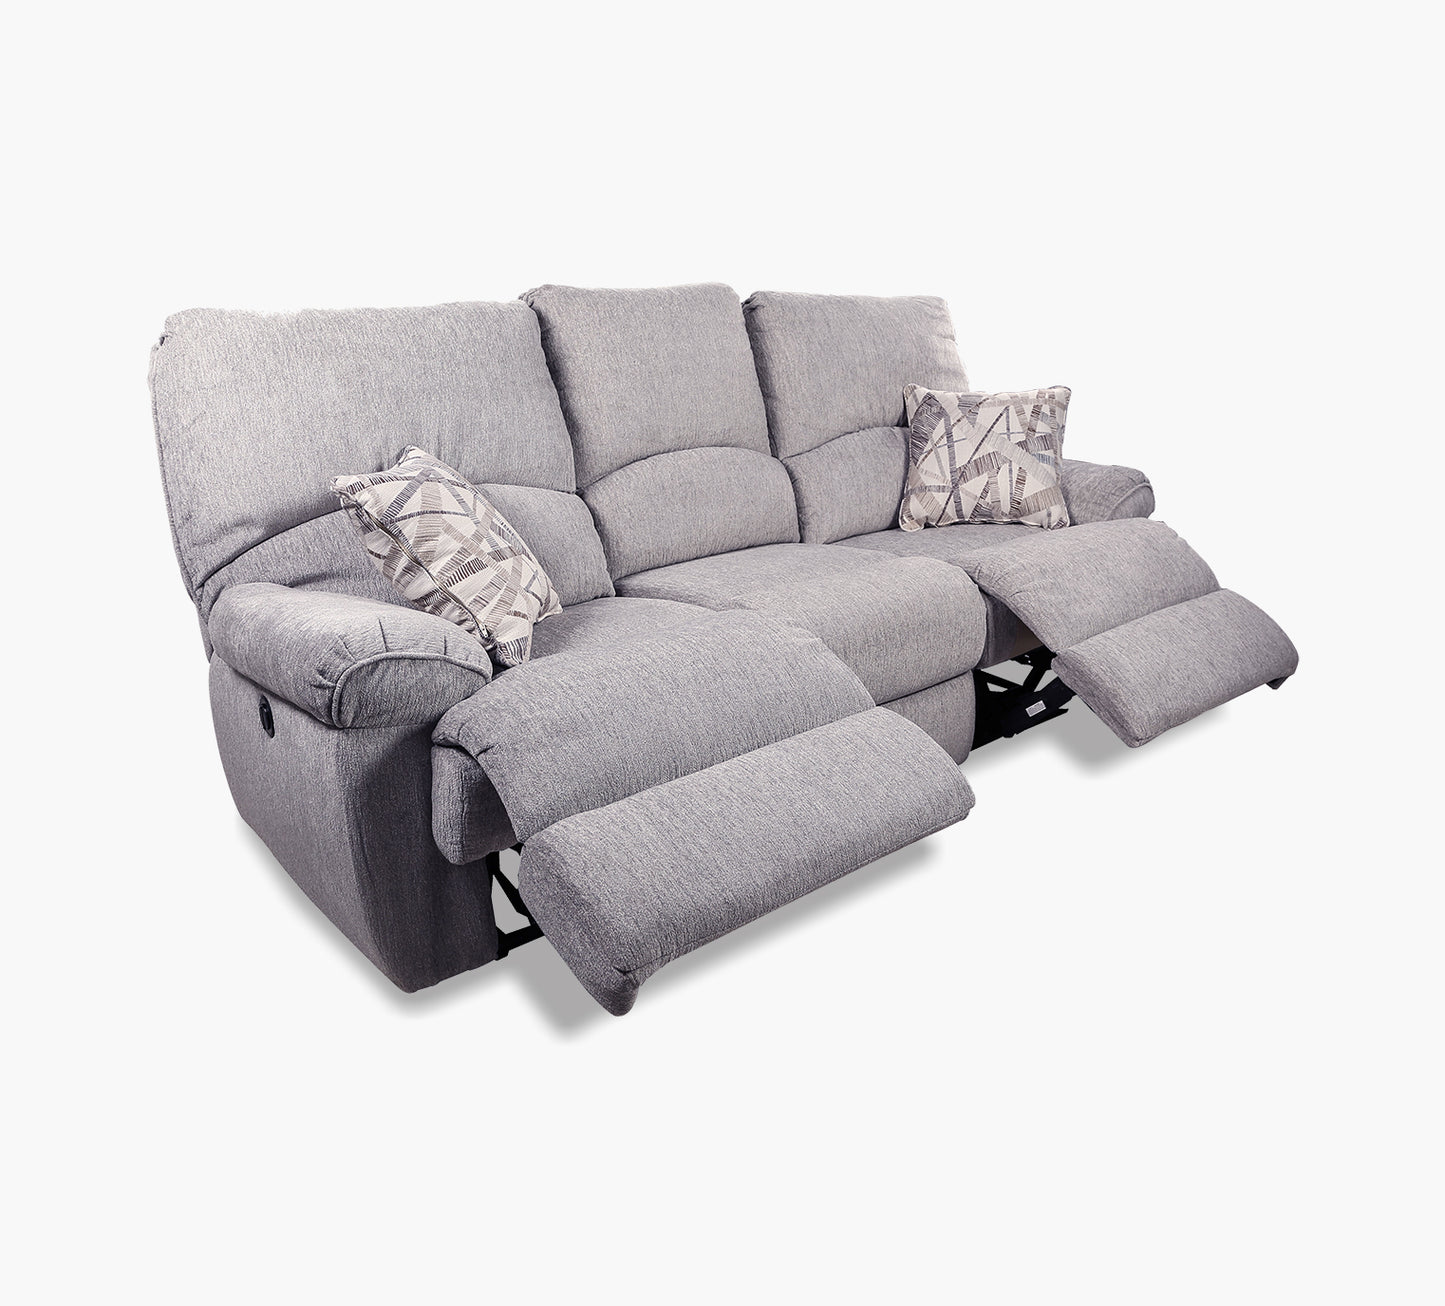 Nexus Power Reclining Sofa with Heat and Massage